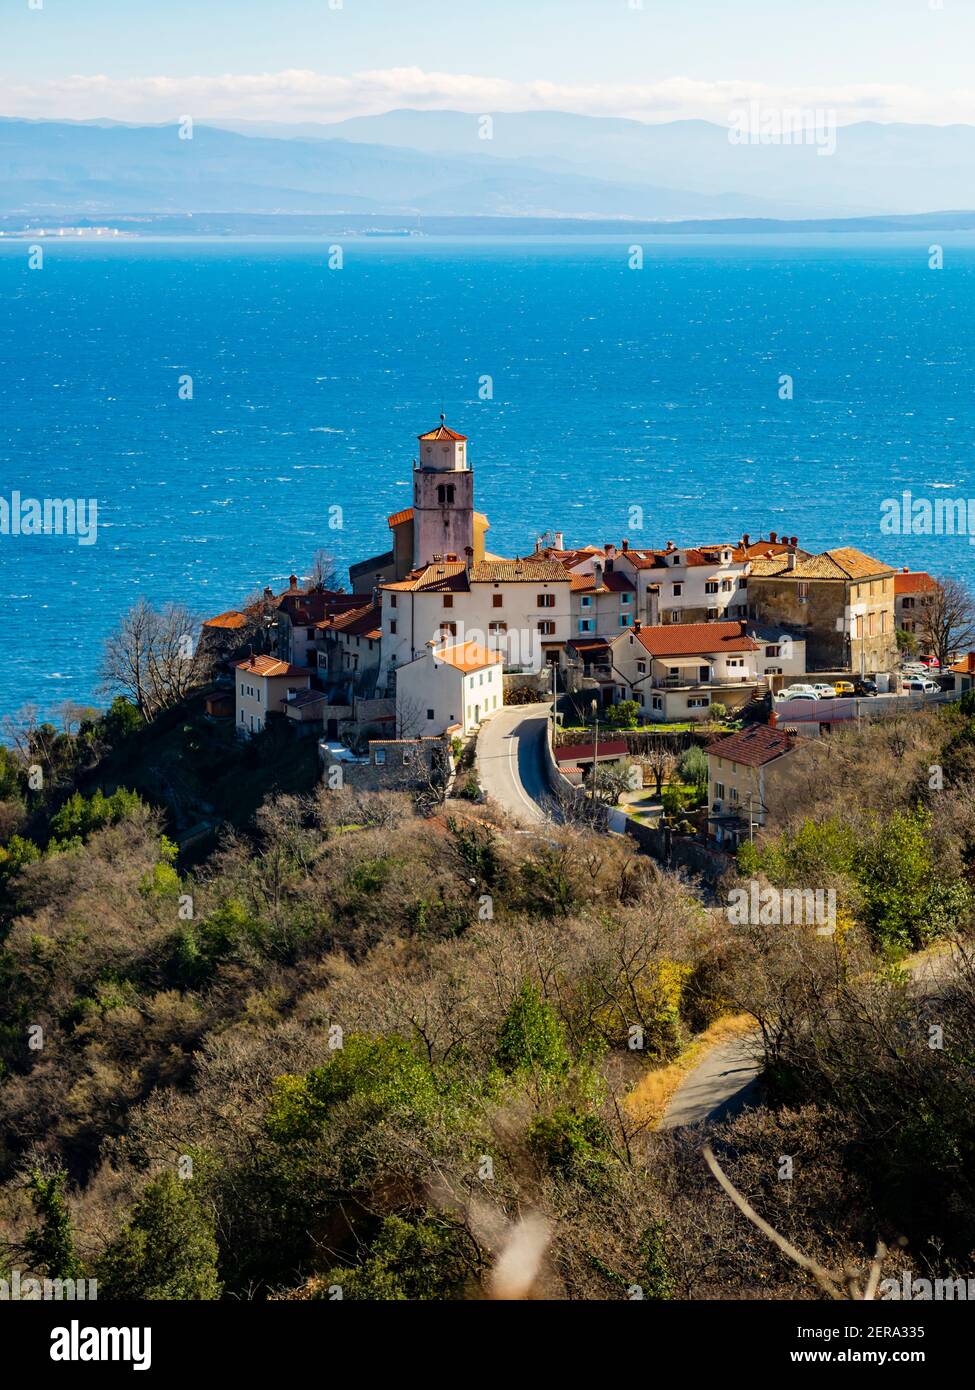 Moscenice near Moscenicka draga in Croatia Europe Stock Photo - Alamy